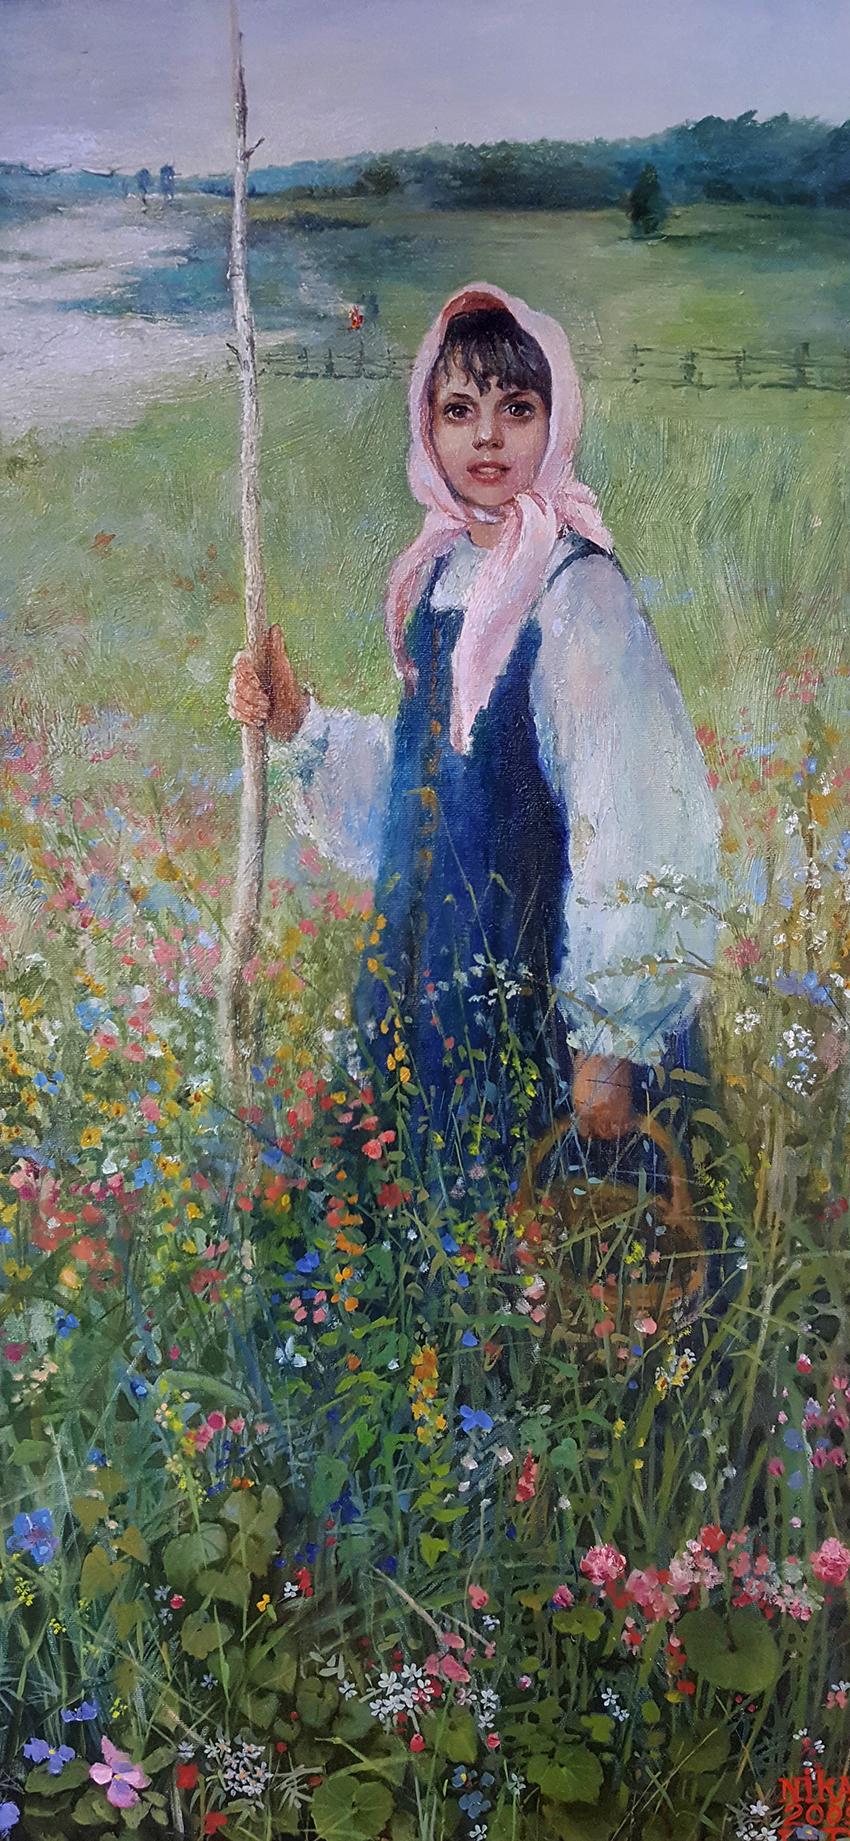 Shepherdess. Original modern art painting